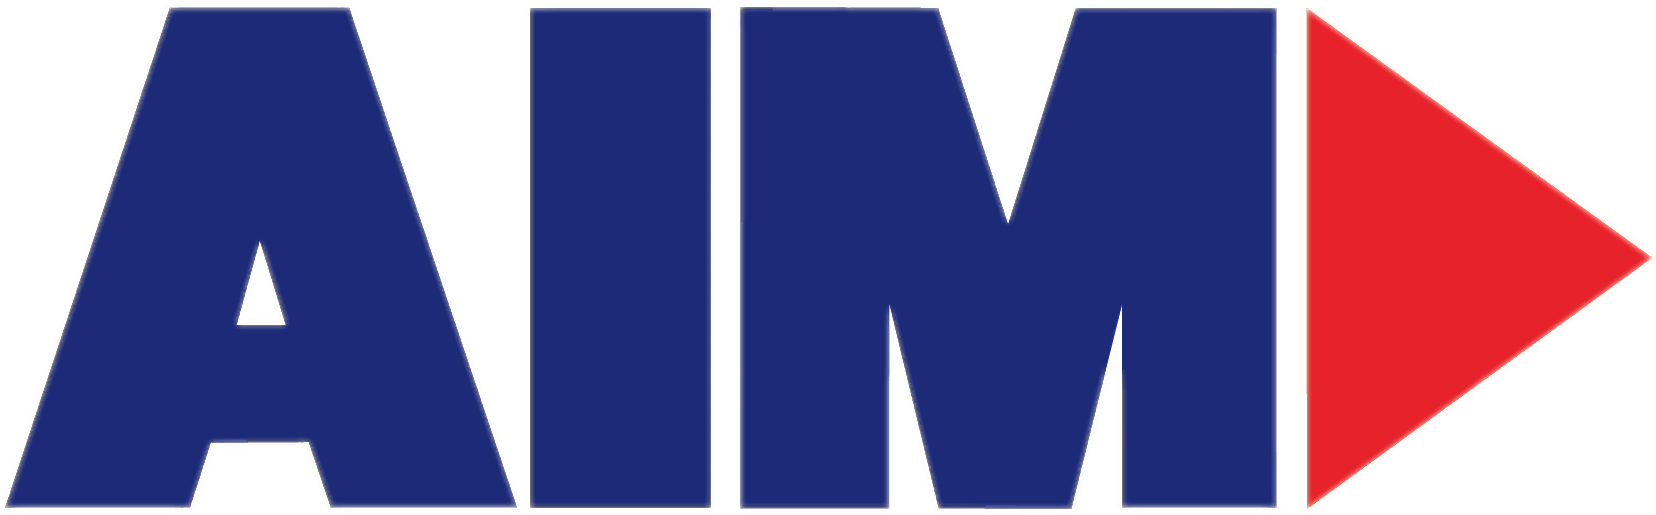 Aim Logo - Aim Unilever (1728x644), Png Download